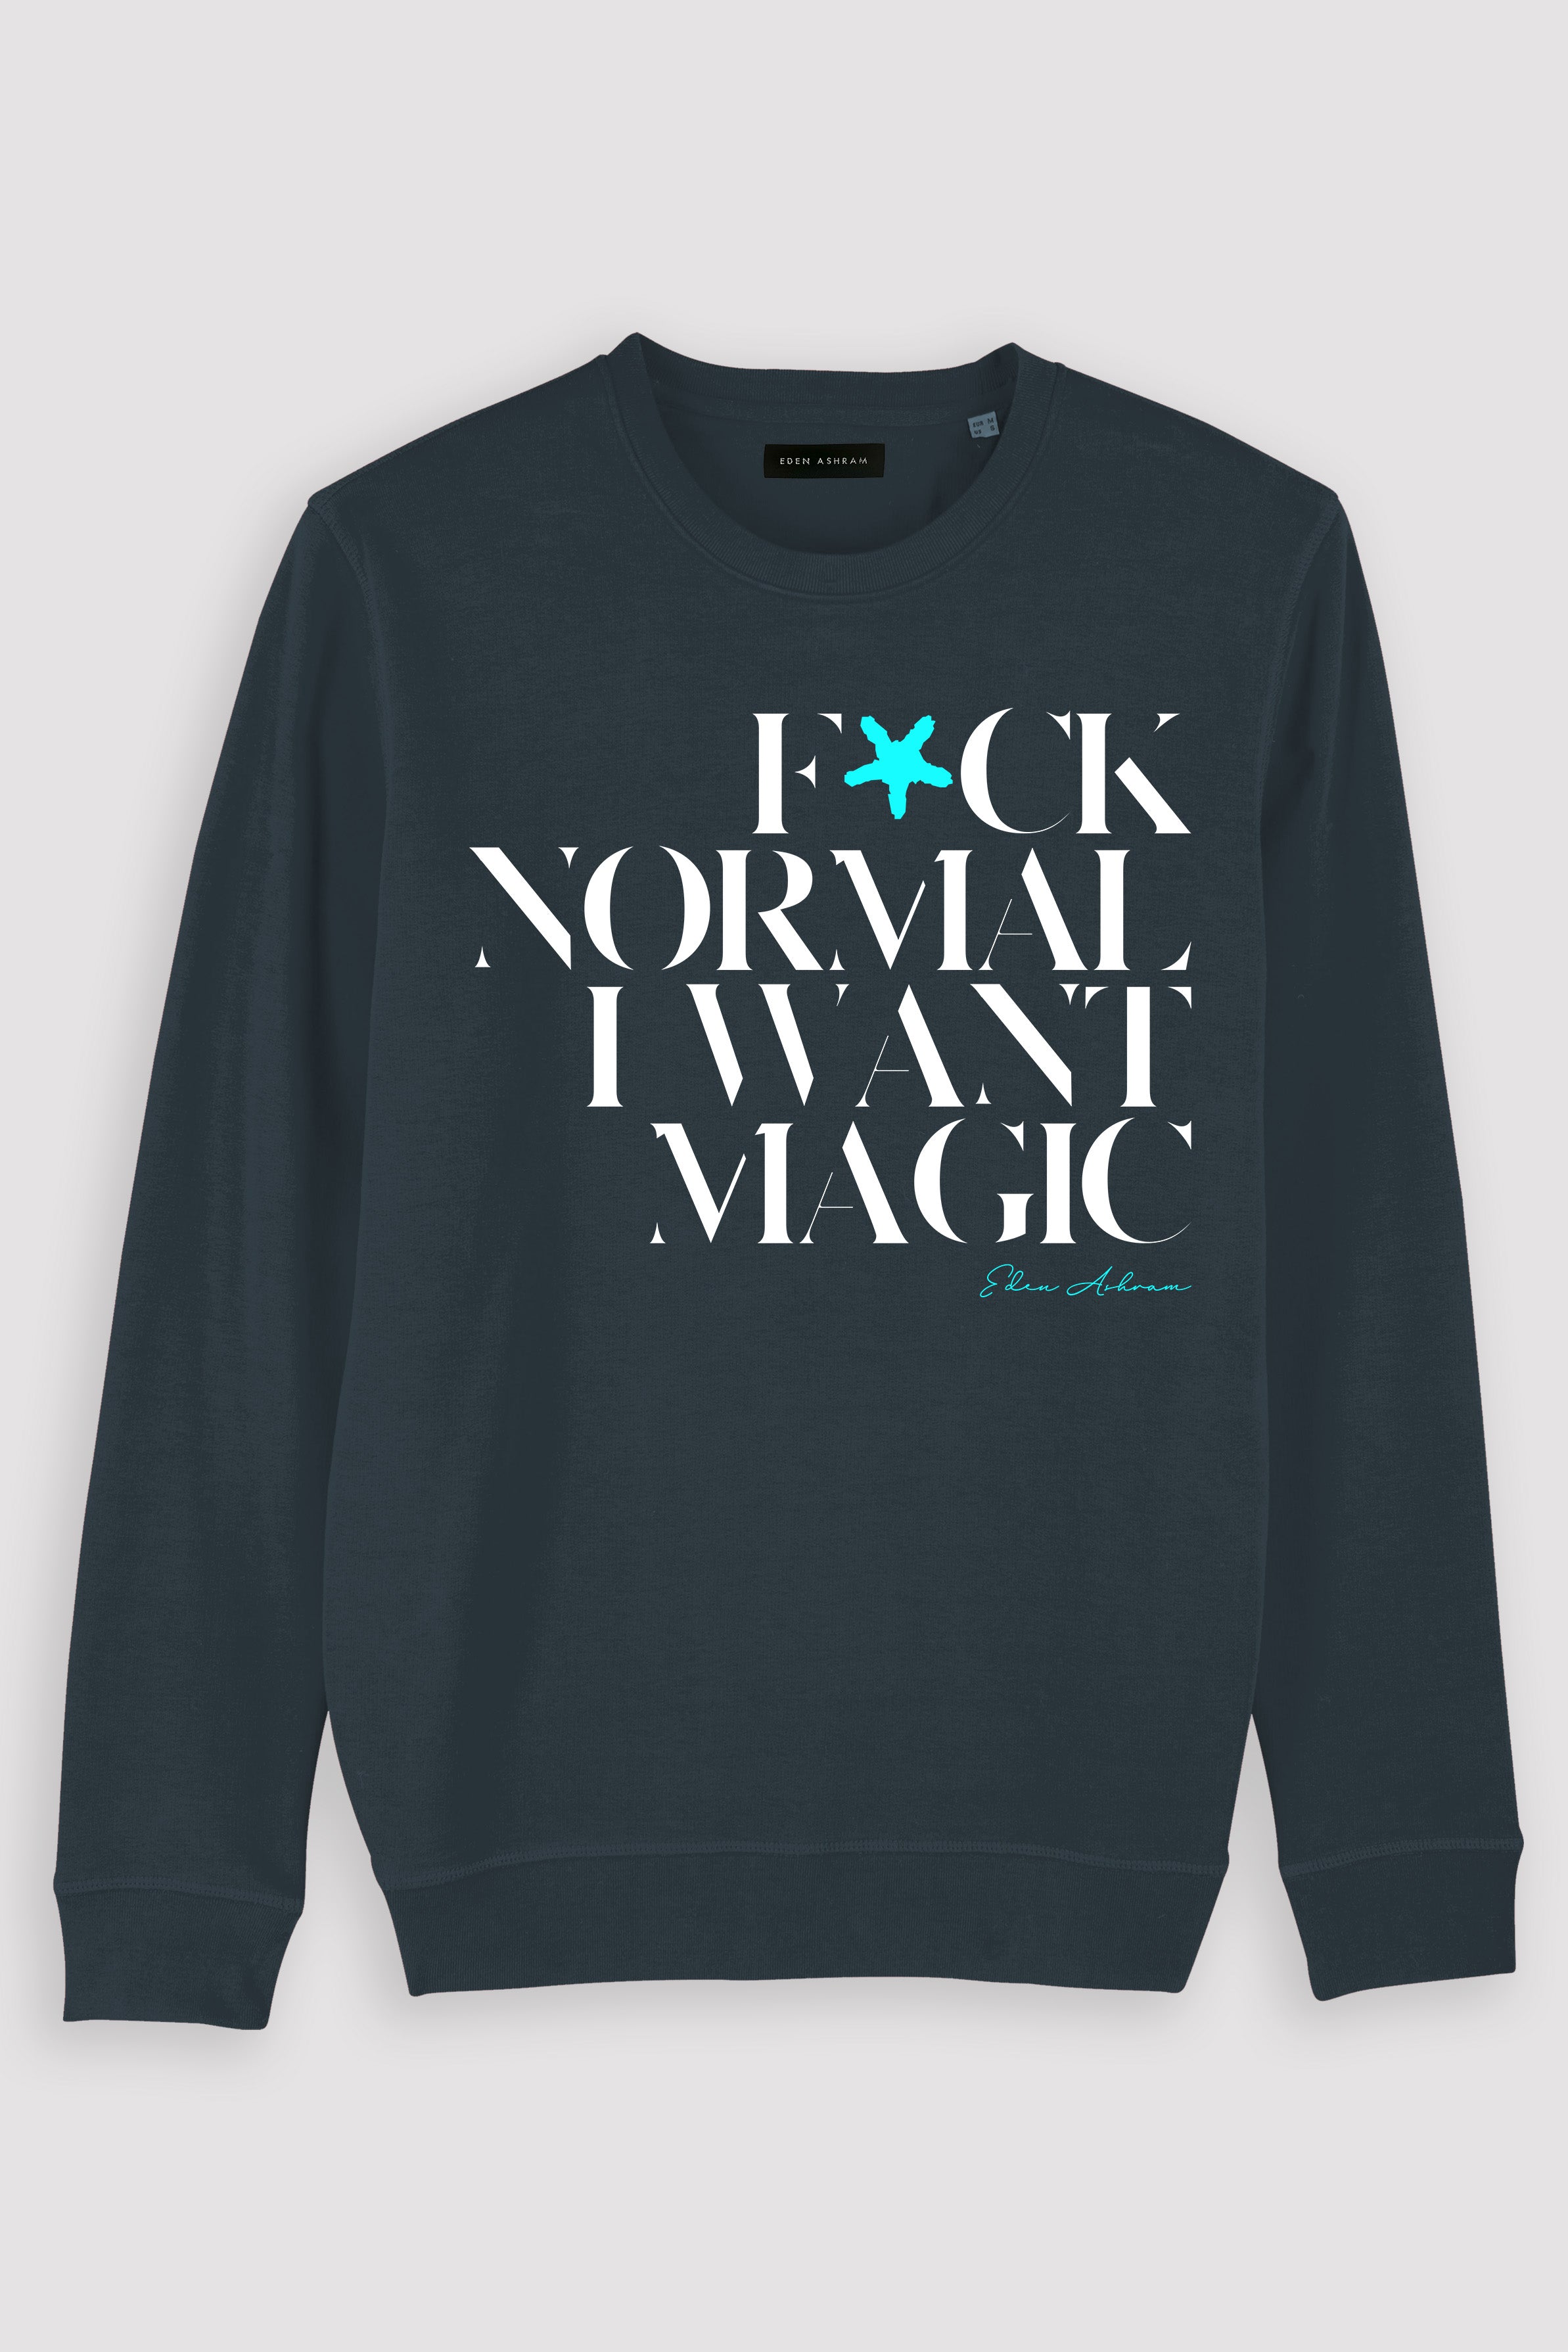 EDEN ASHRAM F*ck Normal I Want Magic Premium Crew Neck Sweatshirt India Ink Grey